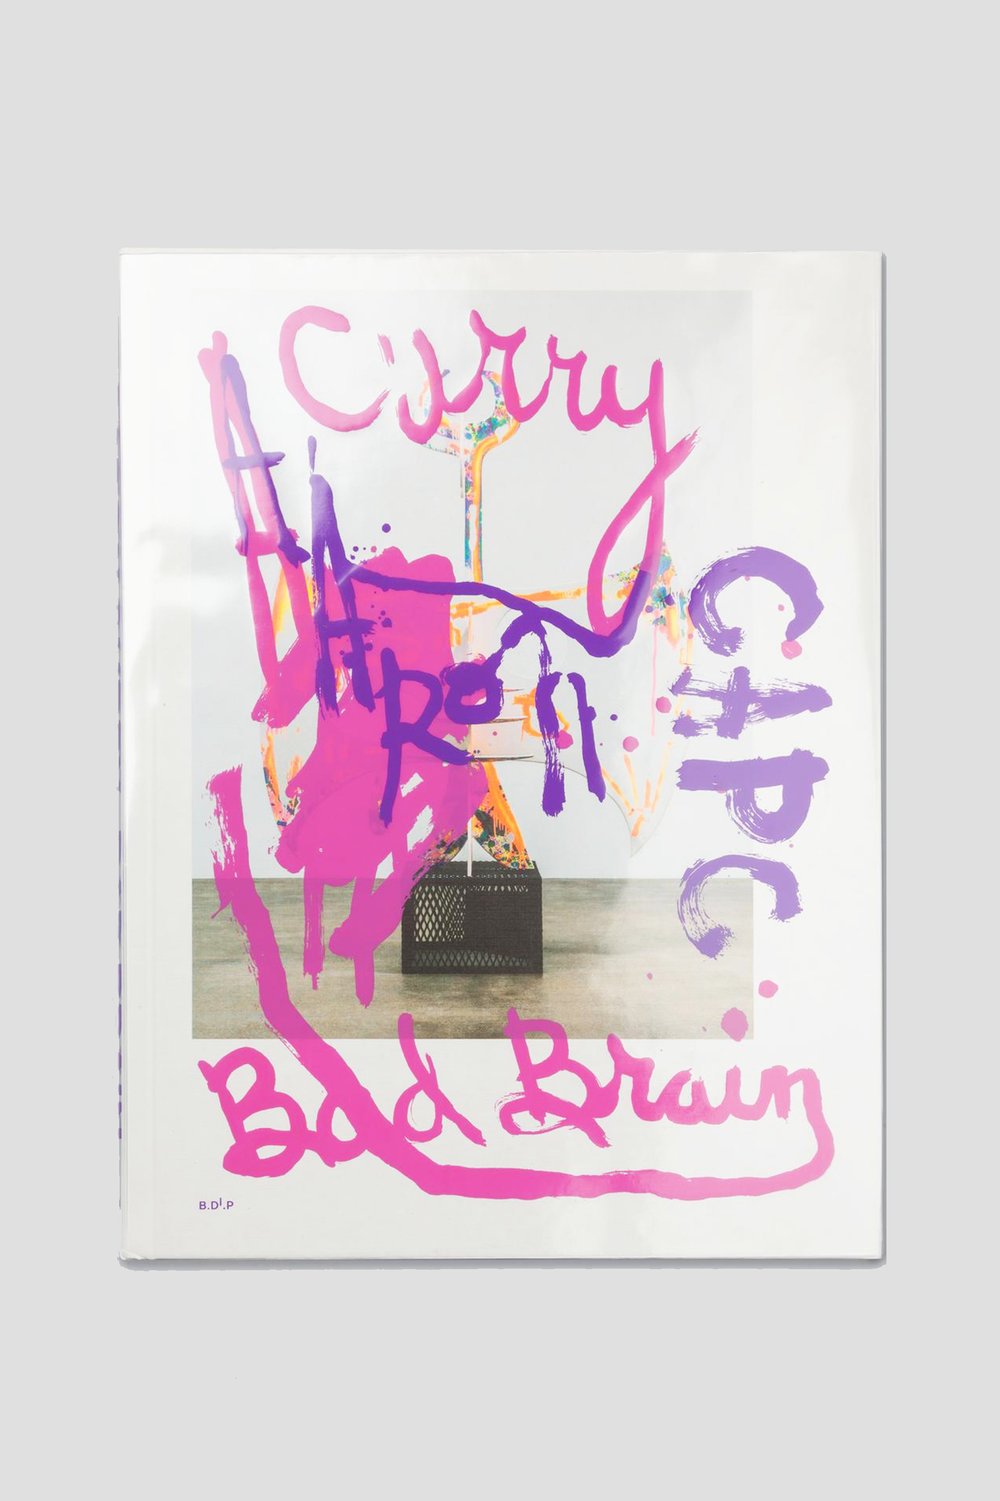 Image of Aaron Curry - Bad Brain